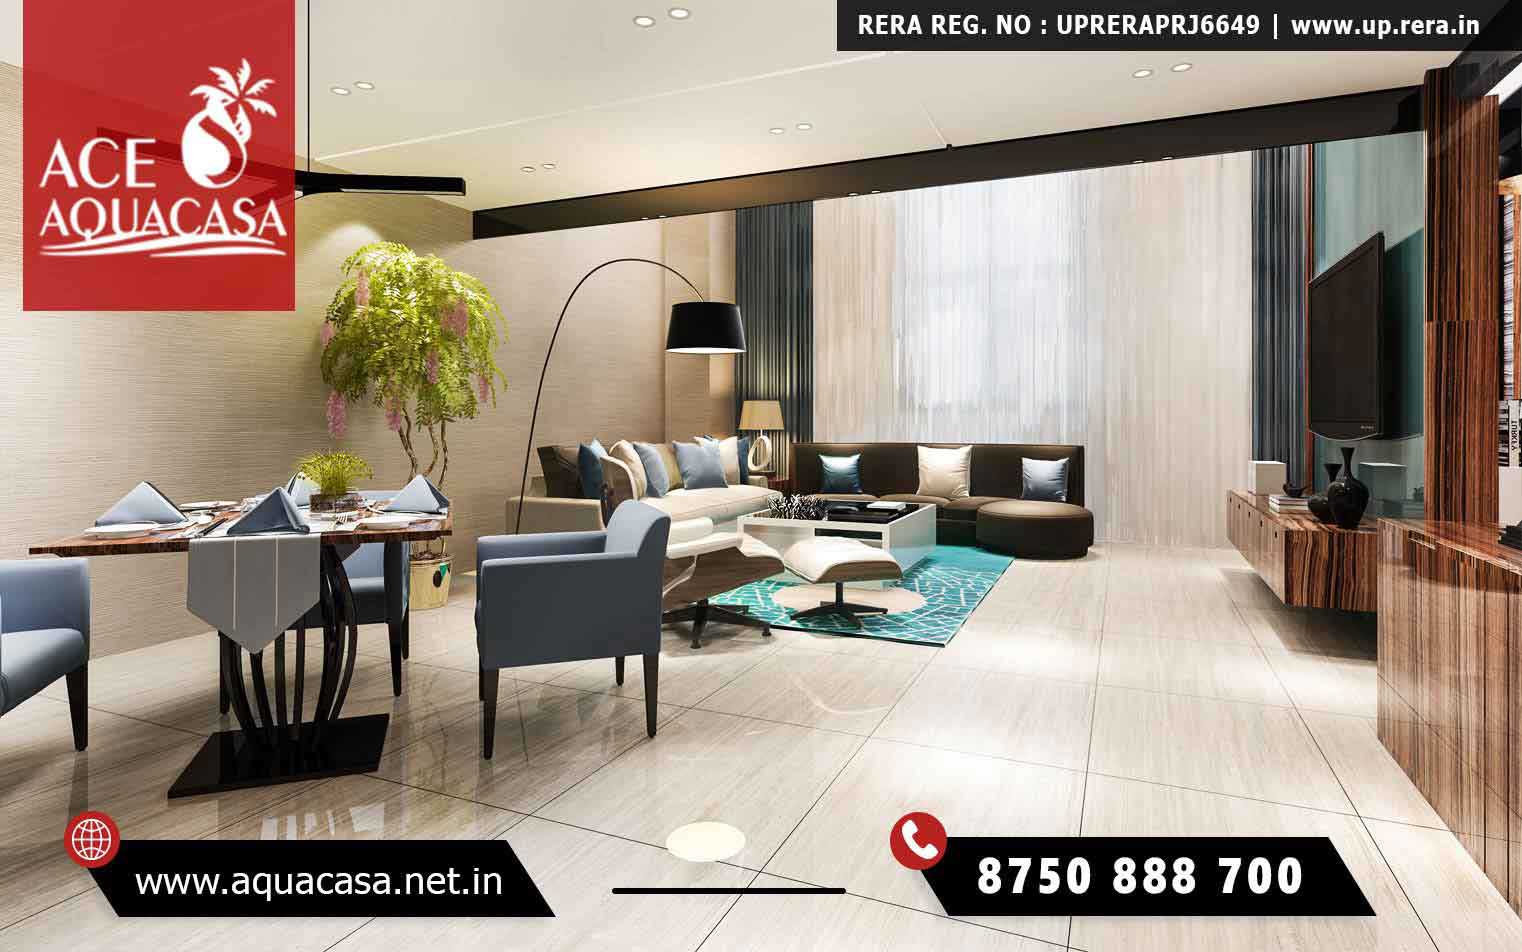 Ace Aqua Casa | Sector 16, Noida Extension | Call @ 8750 888 700